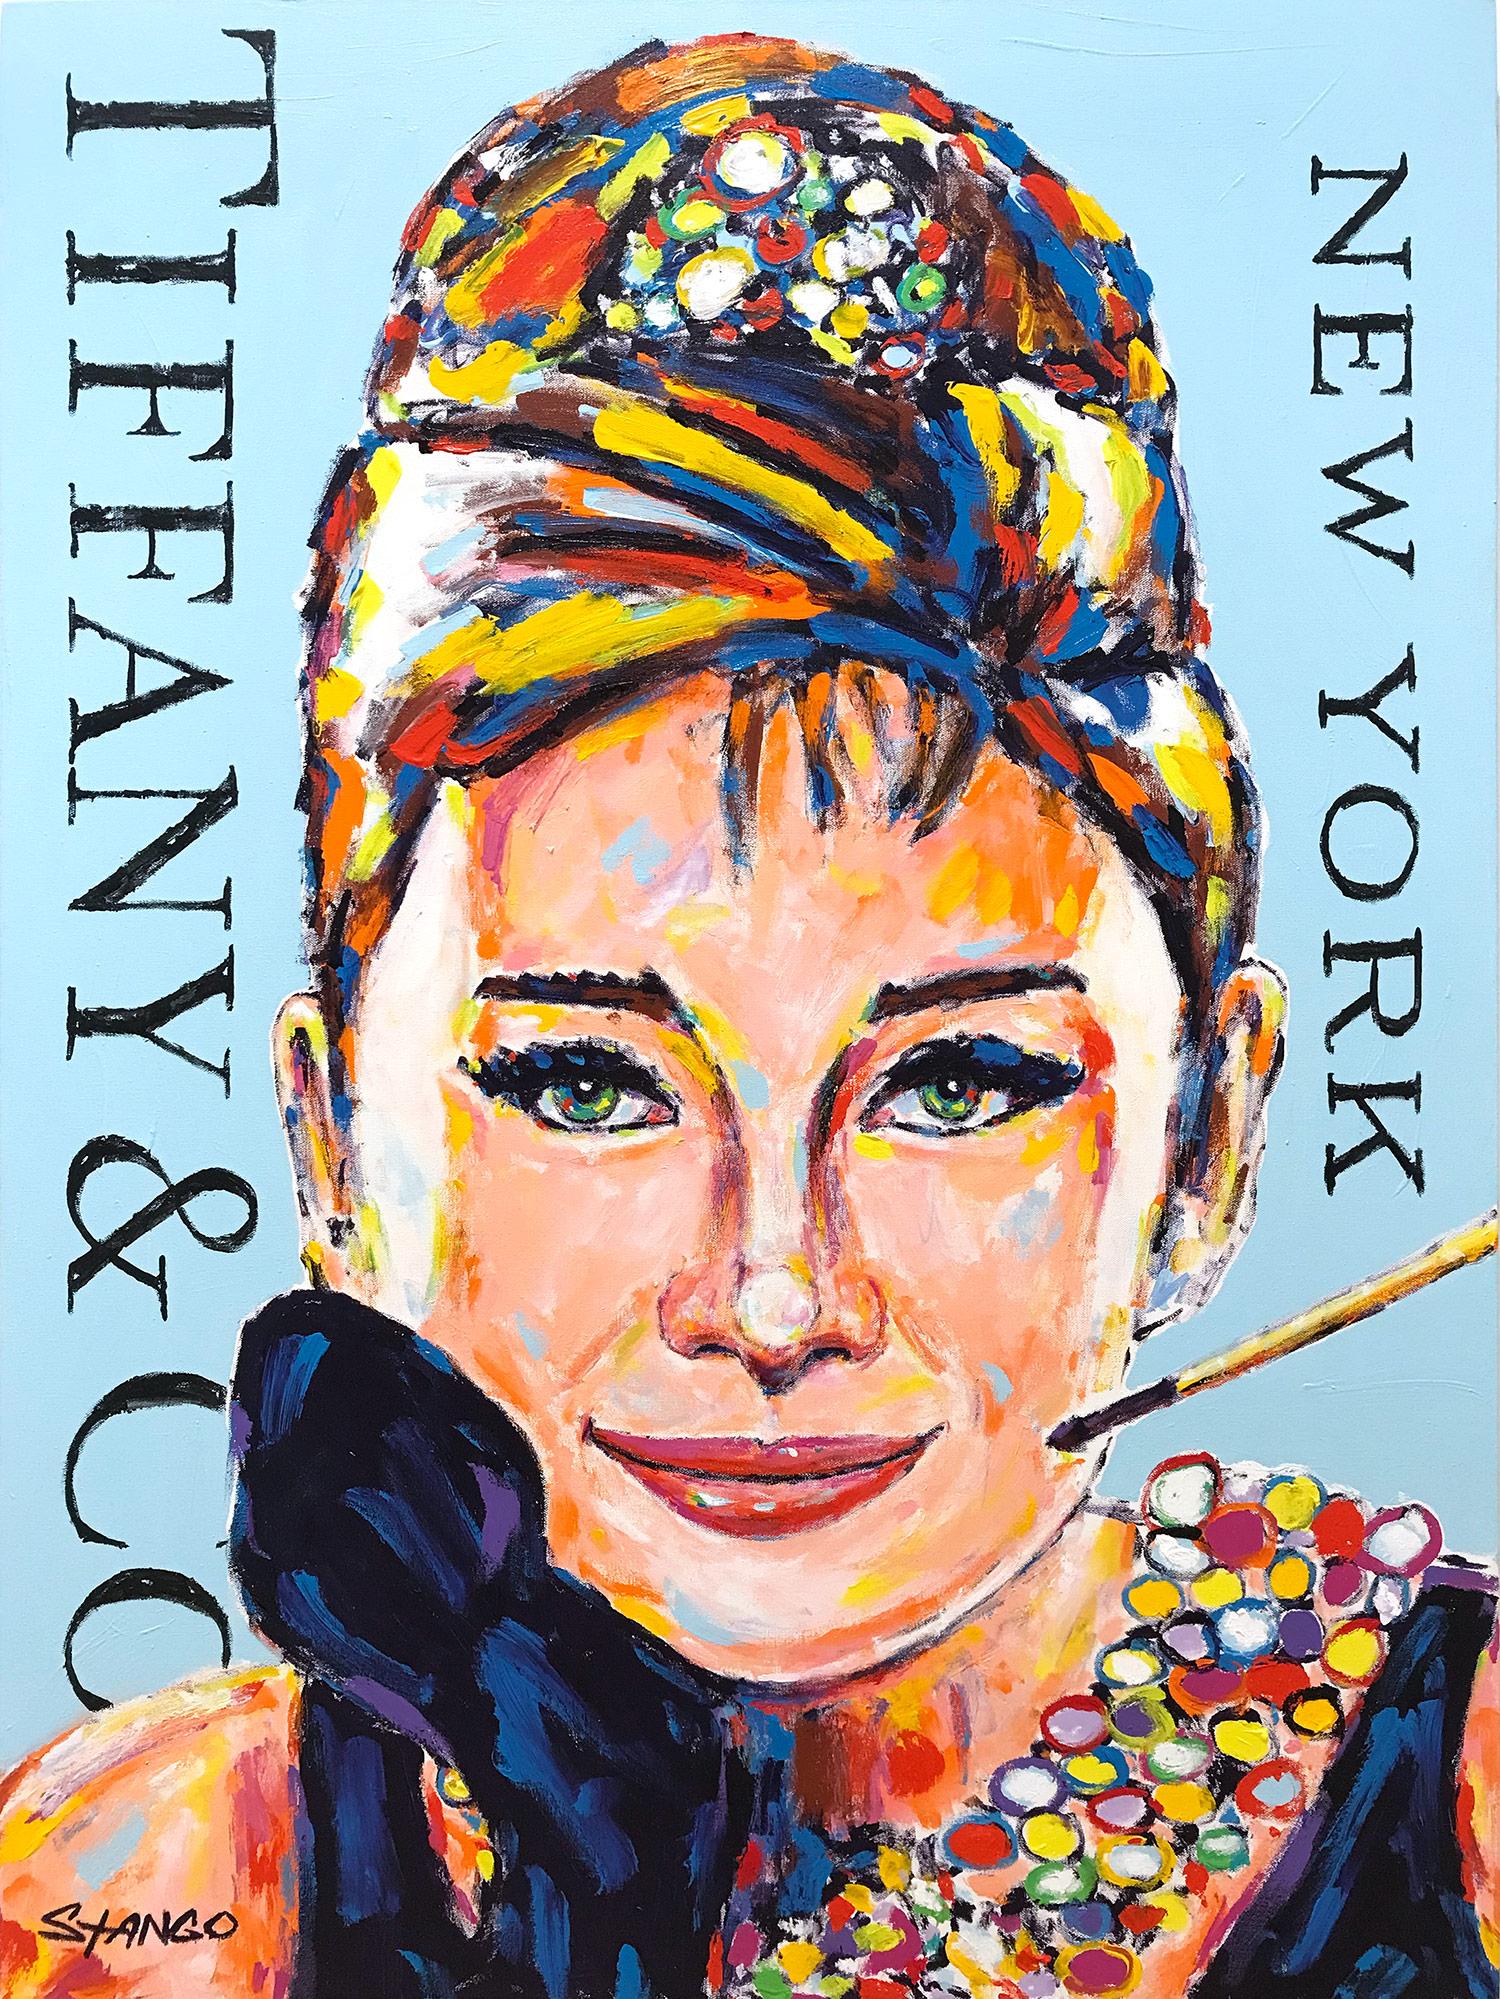 John Stango Abstract Painting - "Miss Audrey Hepburn" Audrey & Tiffany & Co. Pop Art Acrylic Painting on Canvas